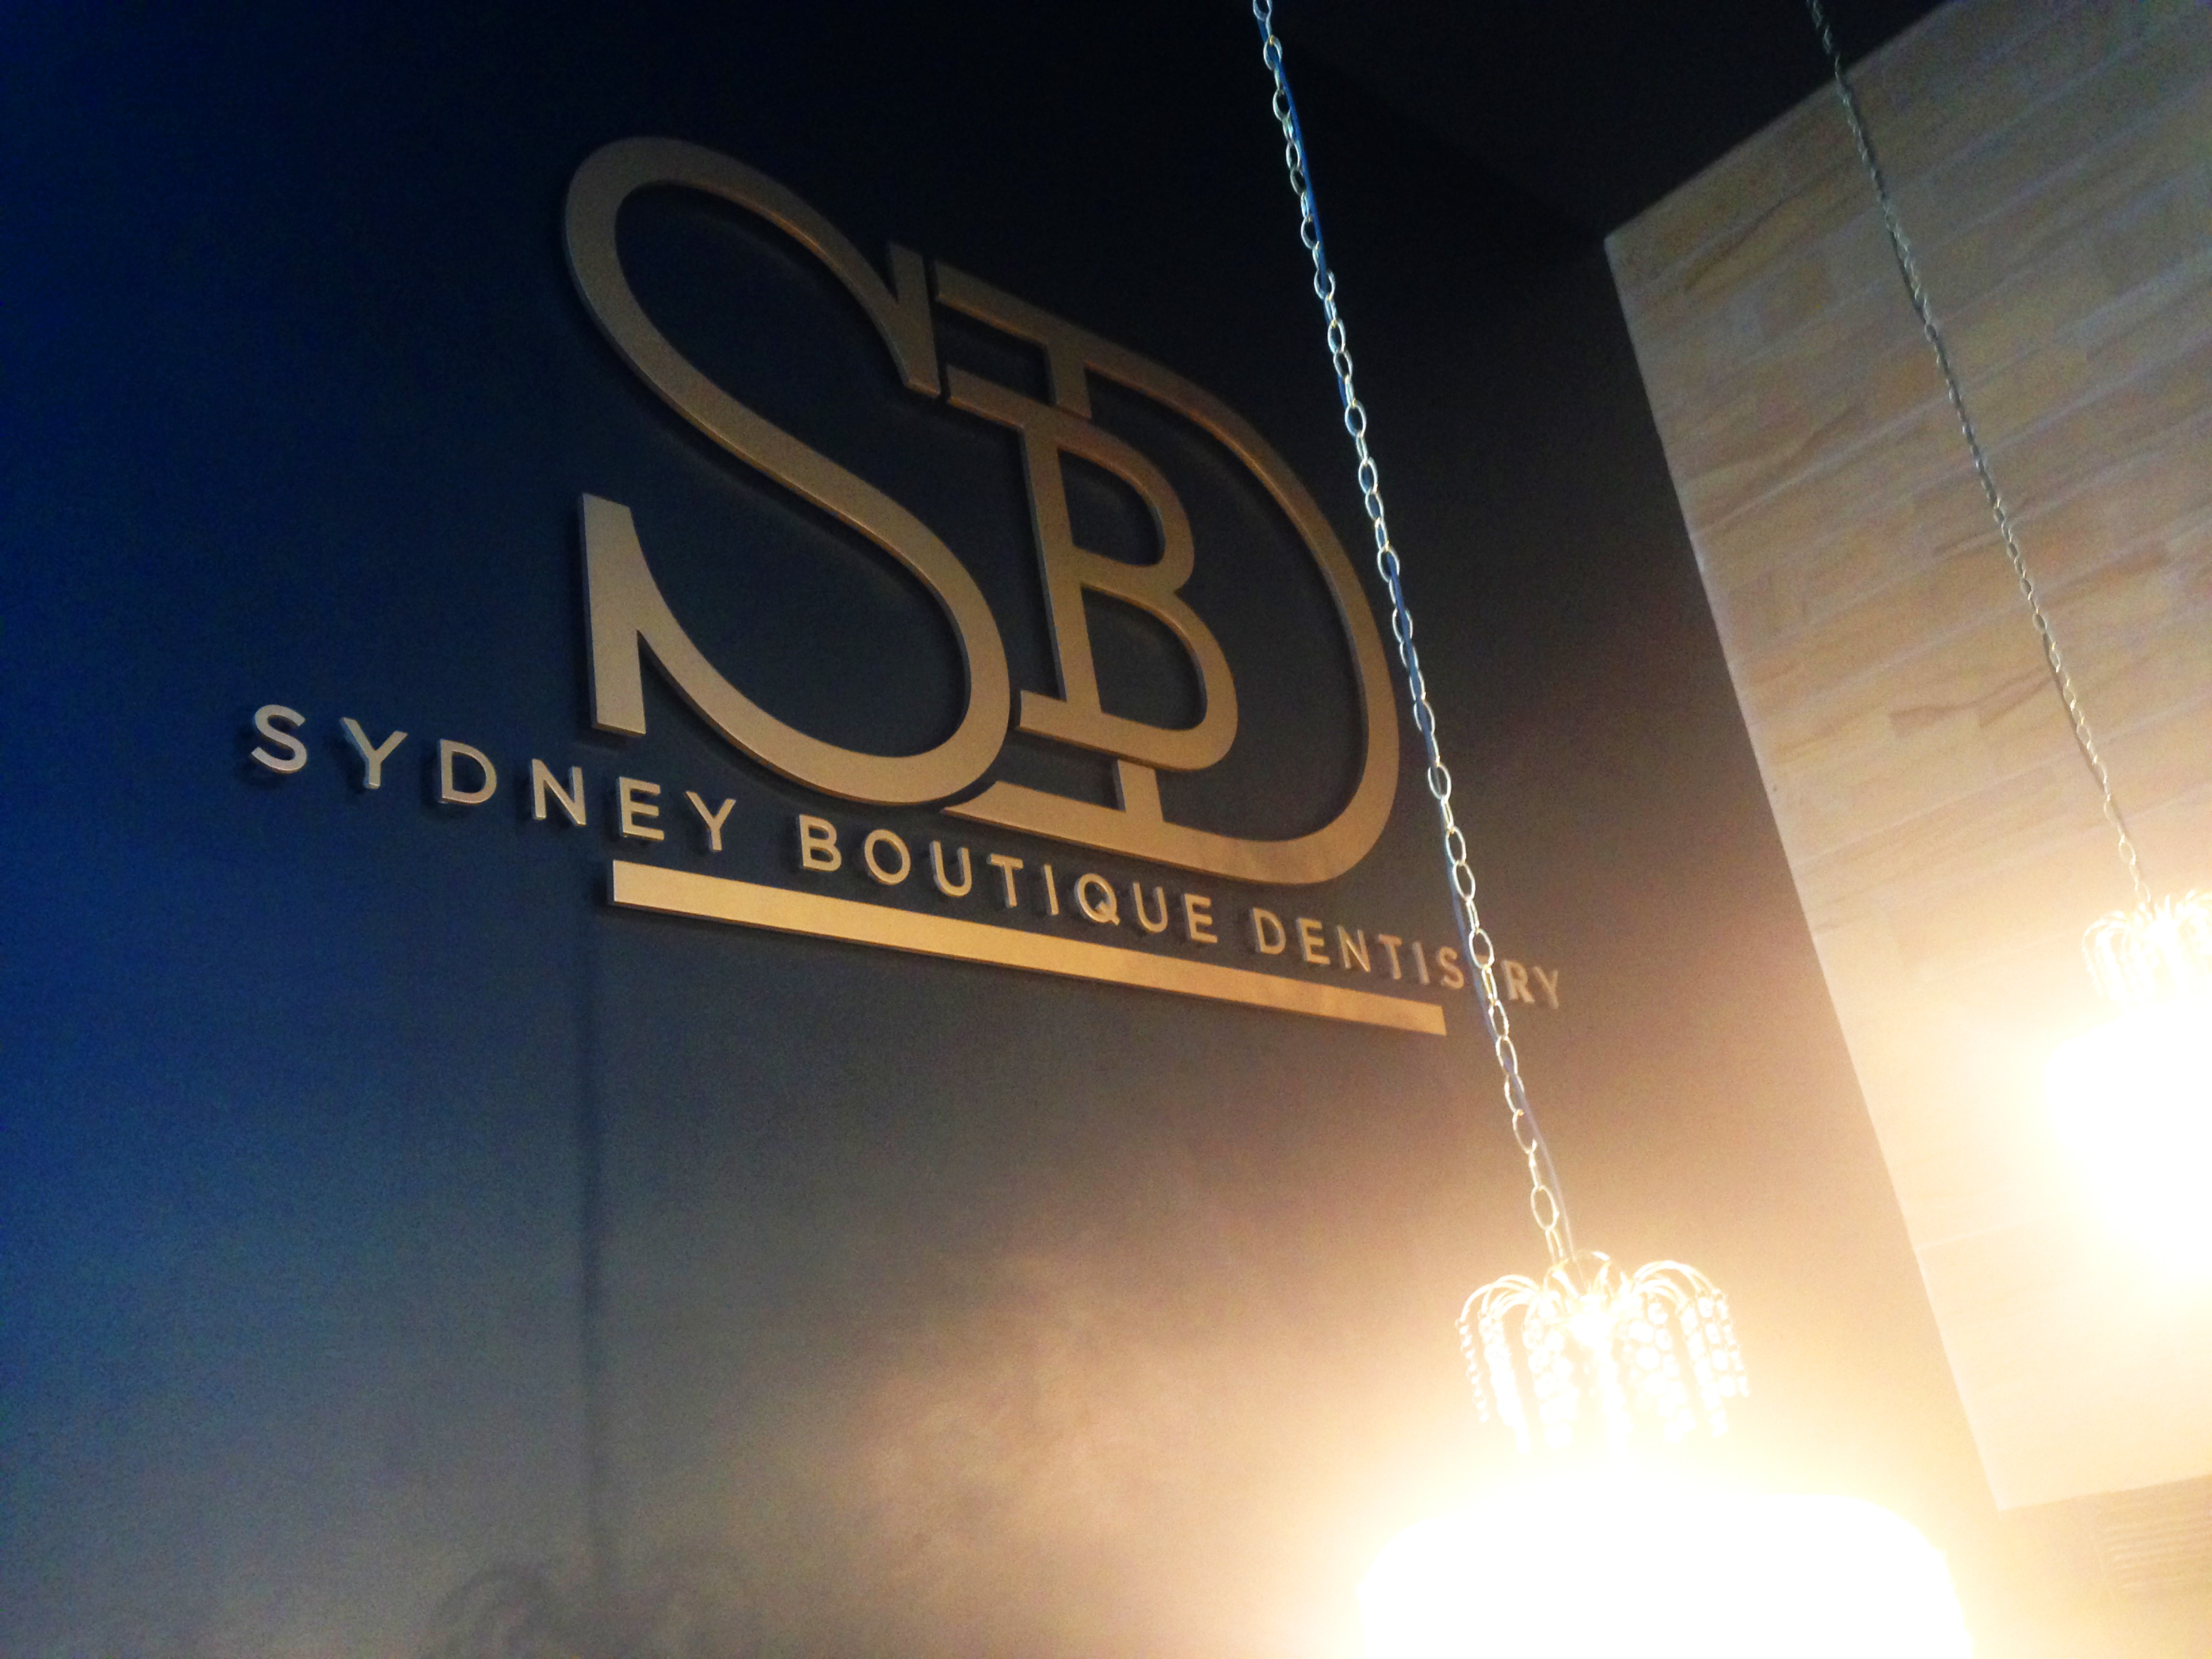 Sydney Boutique Dentistry – 3D Metallic Gold Signage